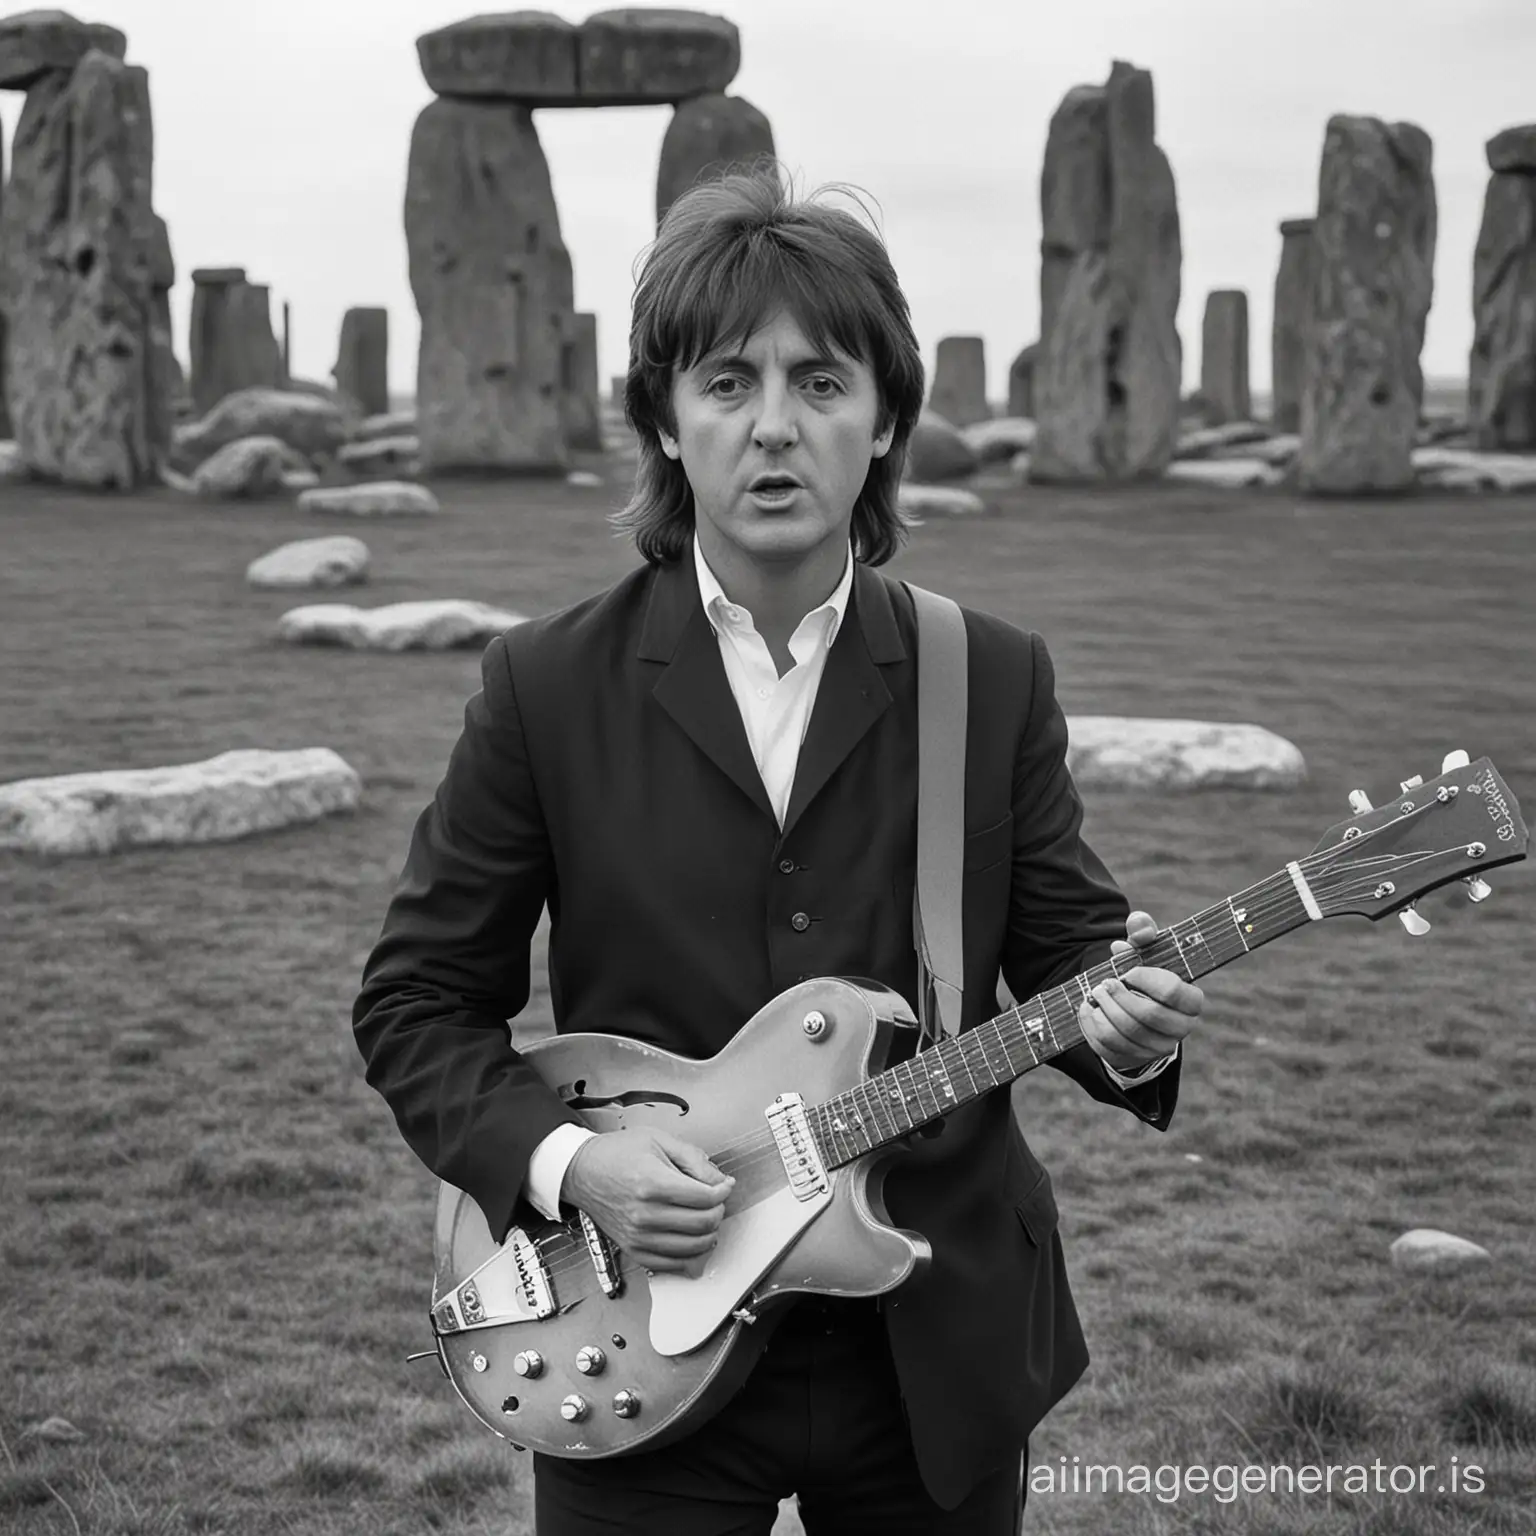 Paul-McCartney-Guitar-Performance-at-Stonehenge